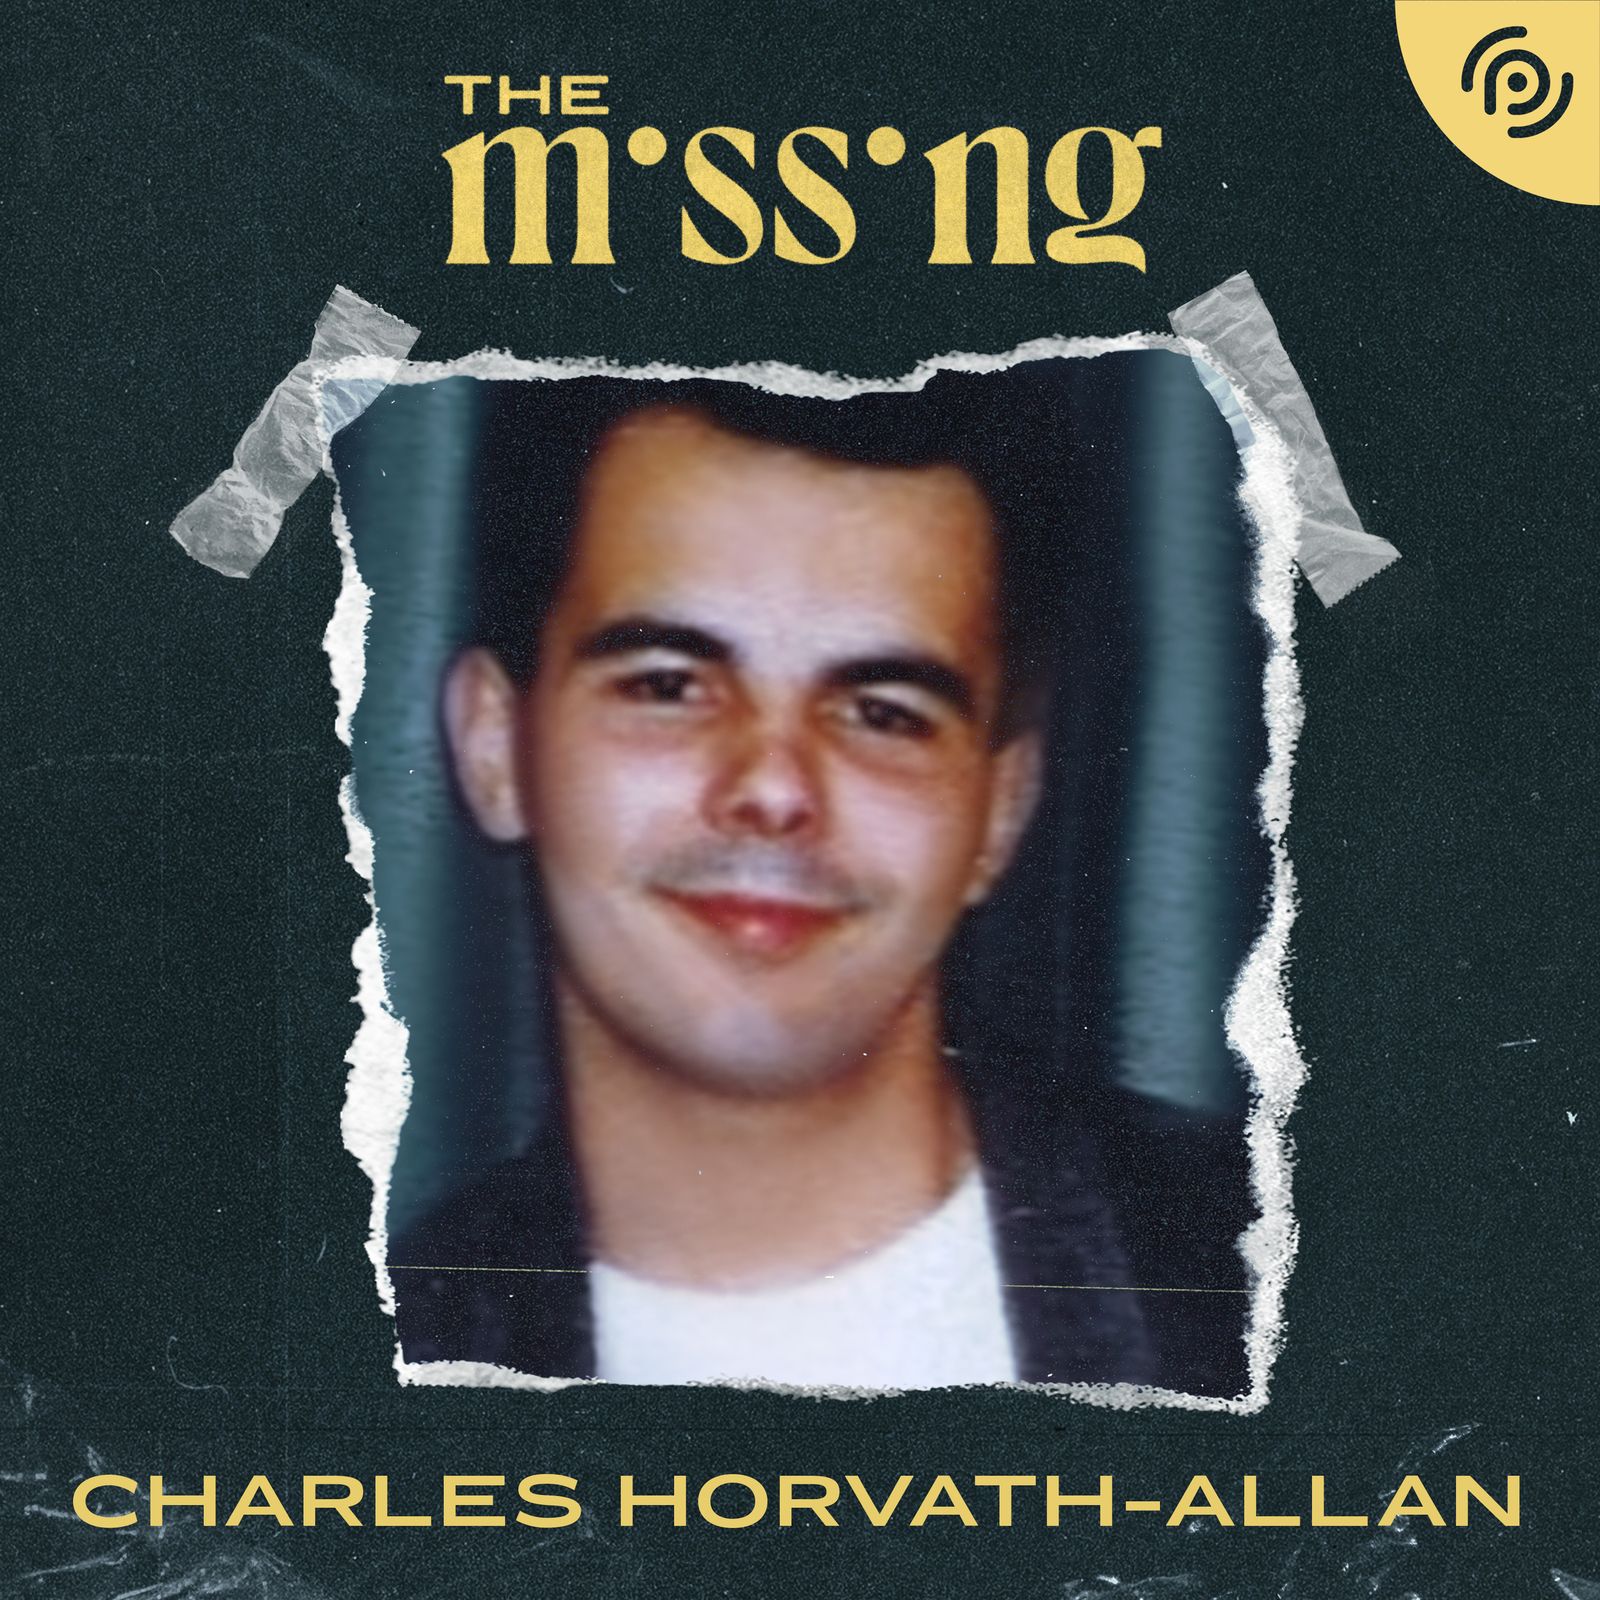 Charles Horvath-Allan